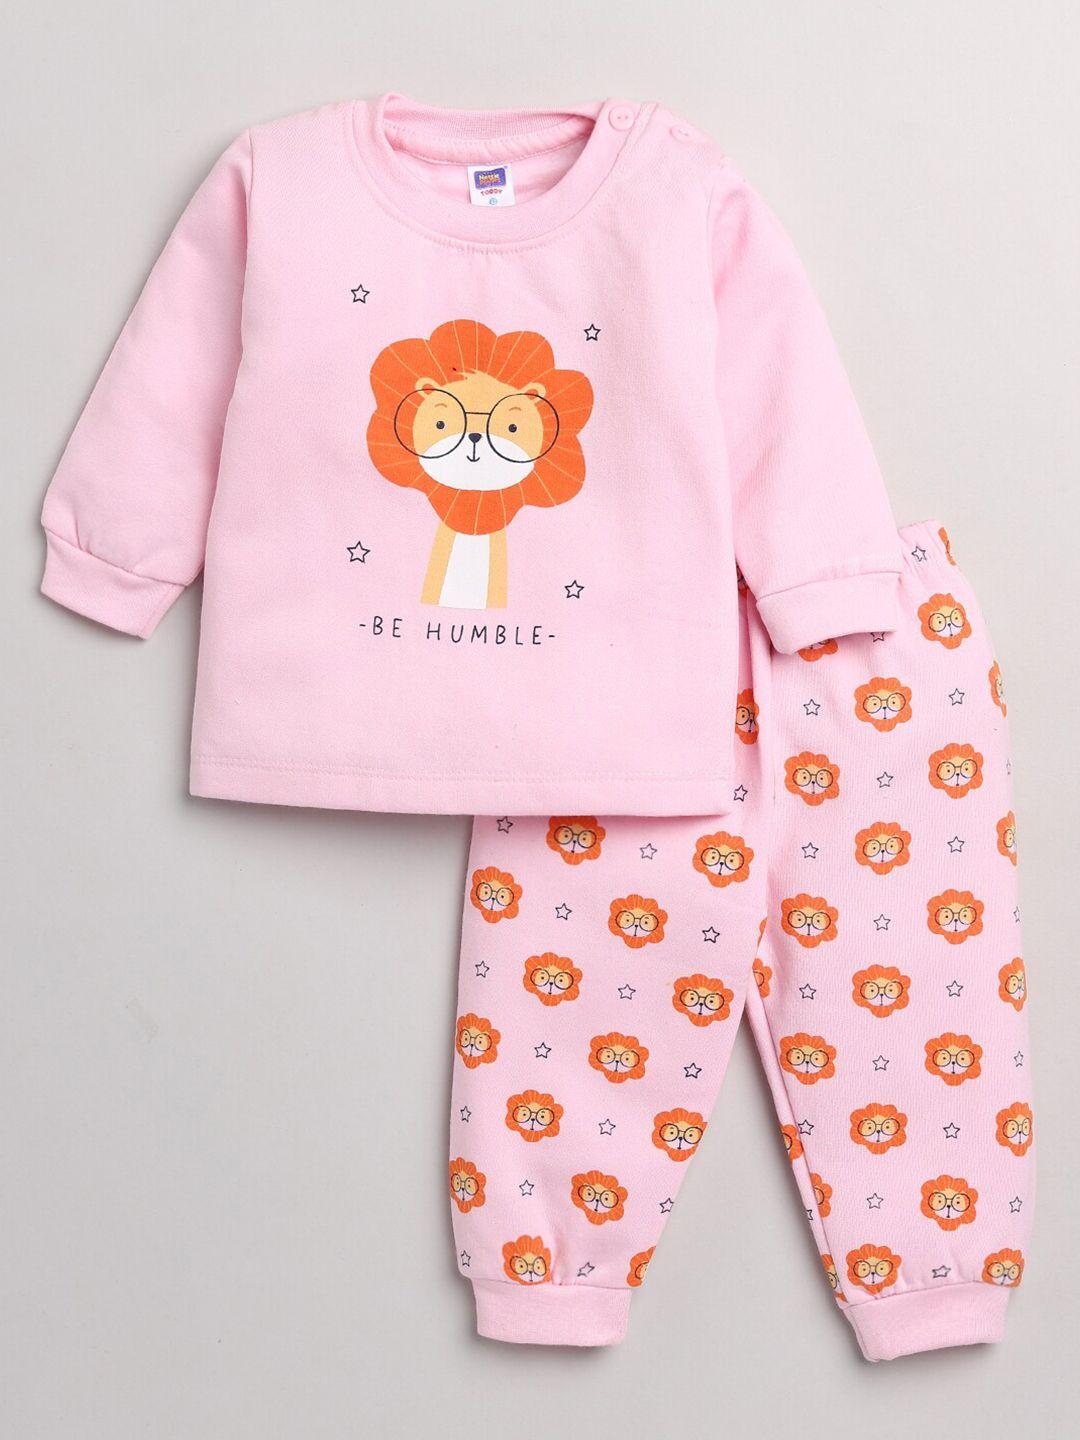 Nottie Planet Kids Pink & Orange Printed Pure Cotton clothing set